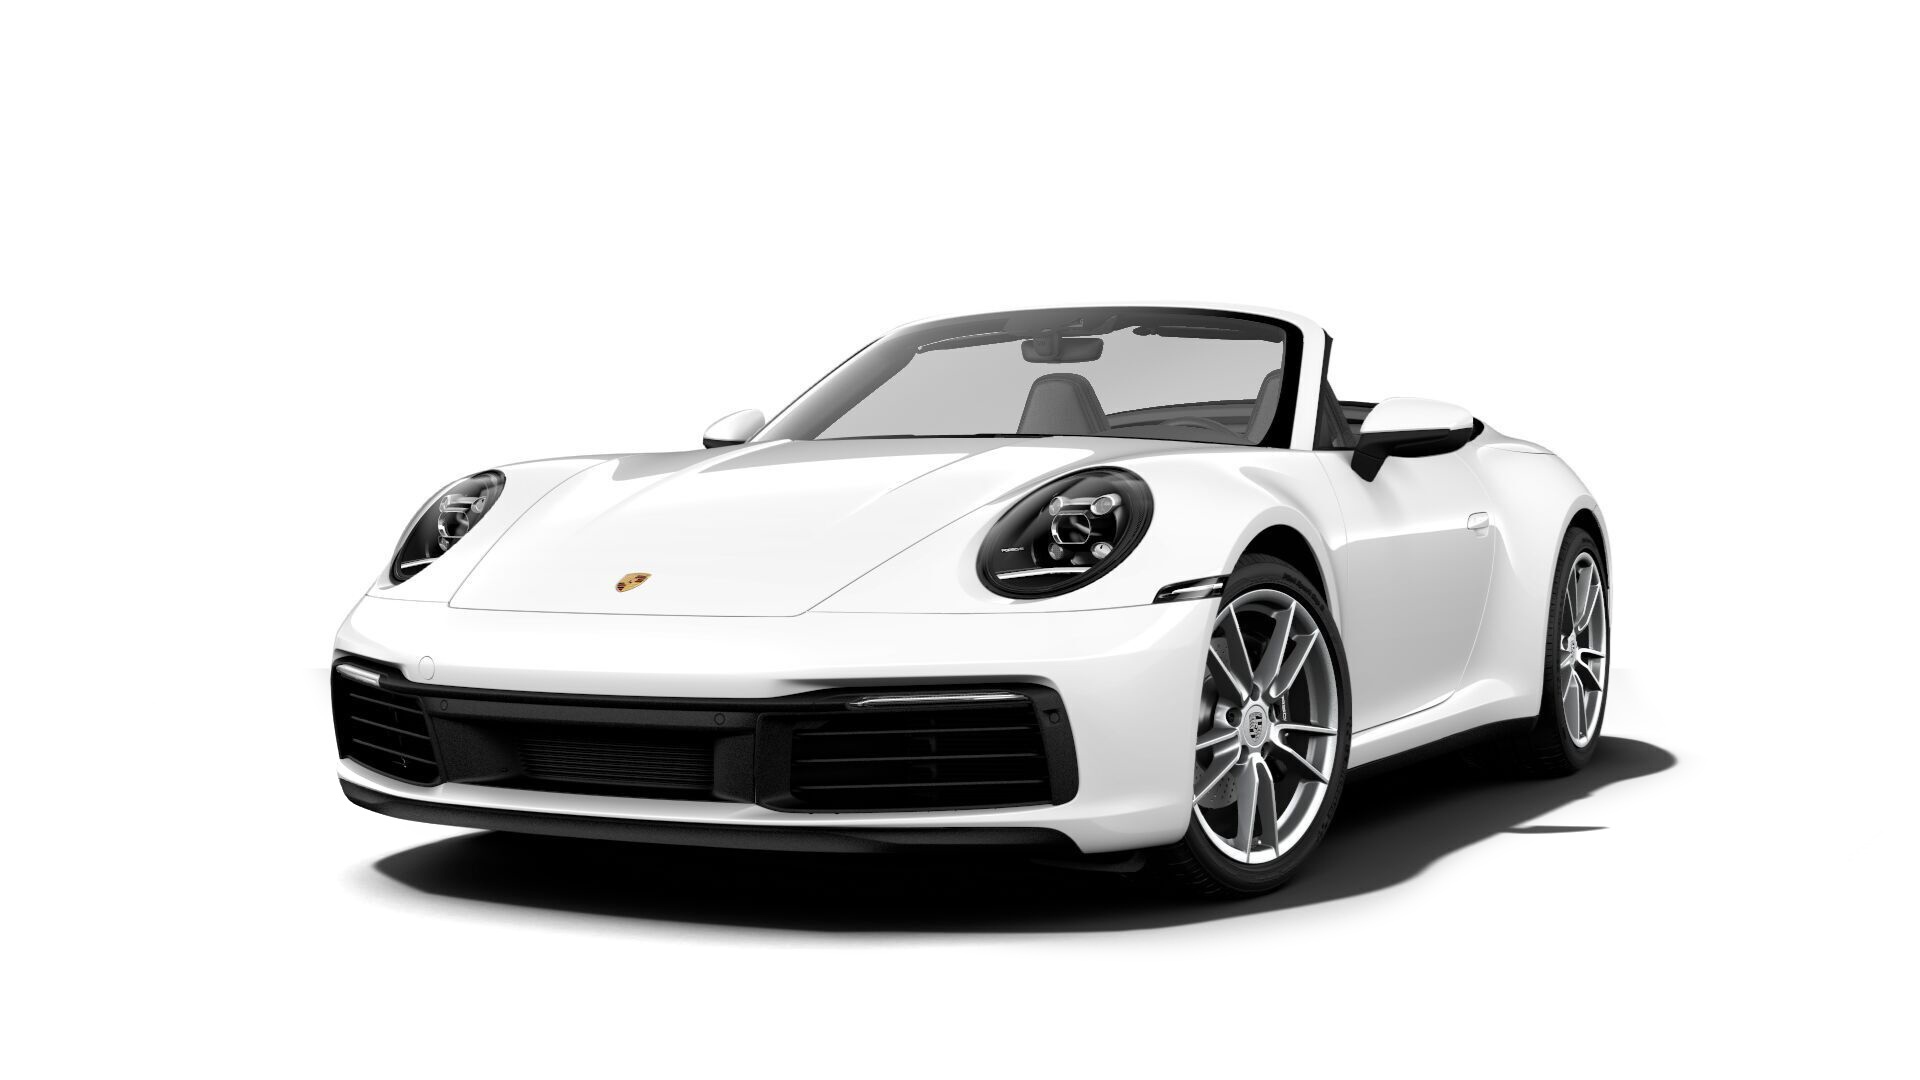 2021 Porsche 911 Carrera Cabriolet Full Specs Features And Price Carbuzz